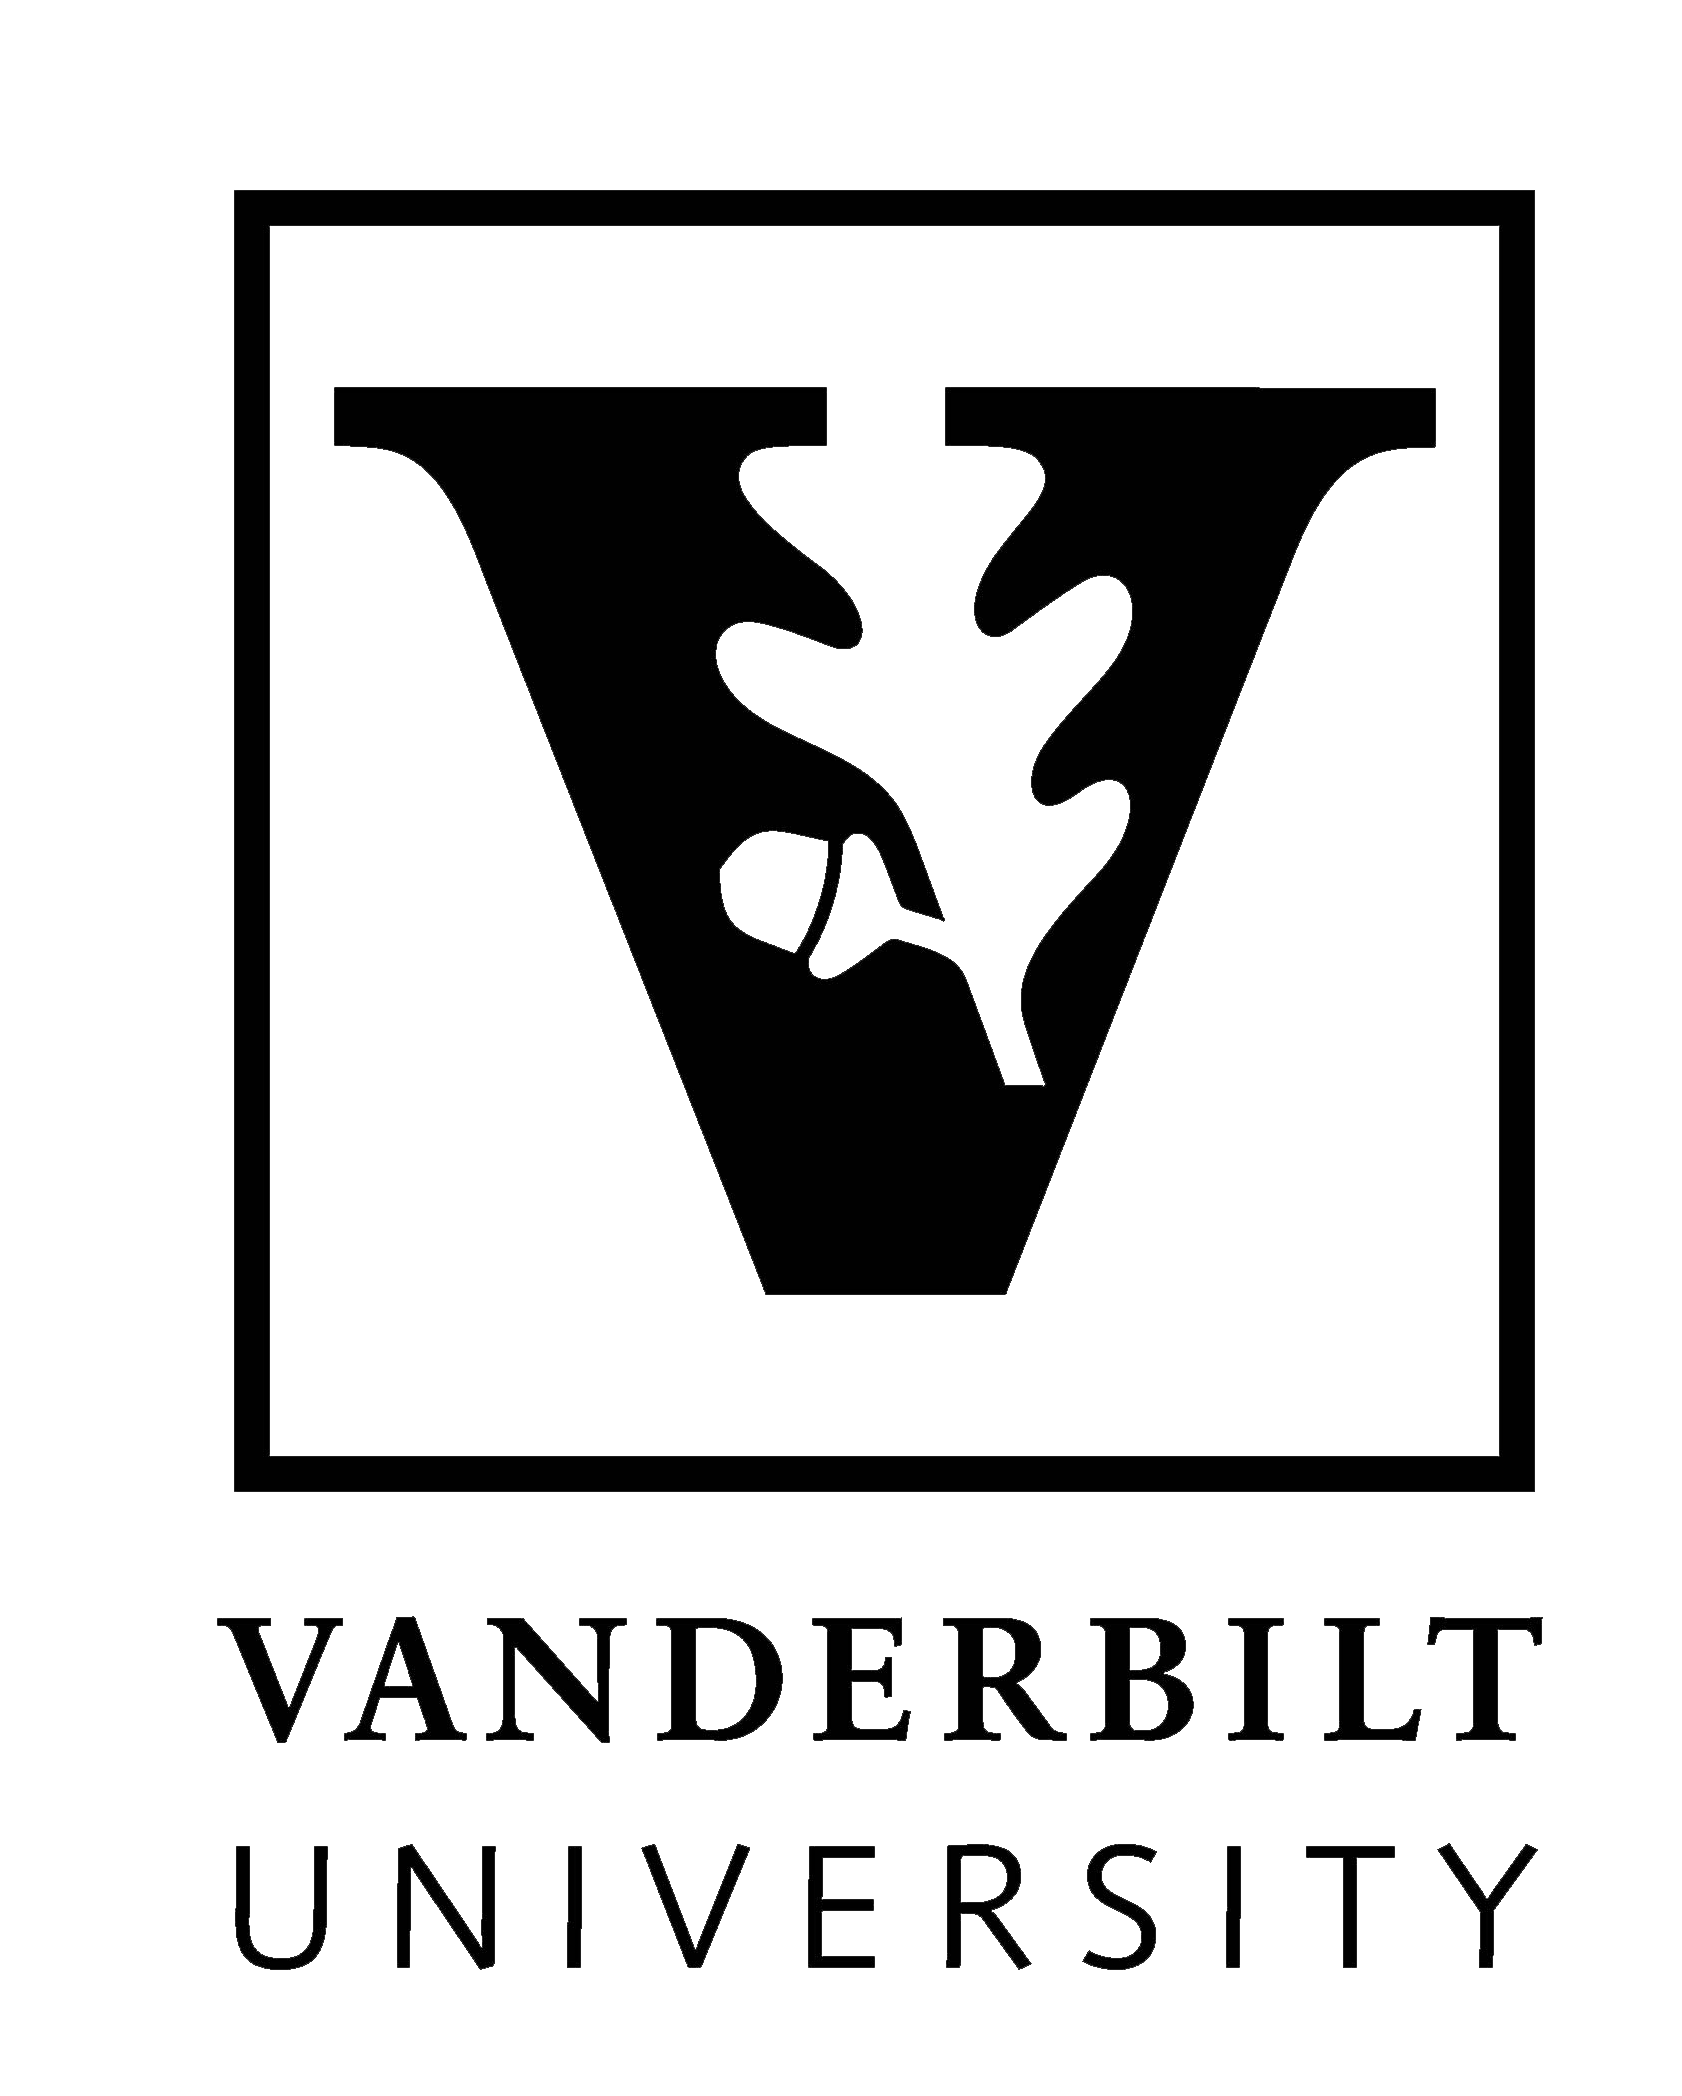 Vanderbilt Universit